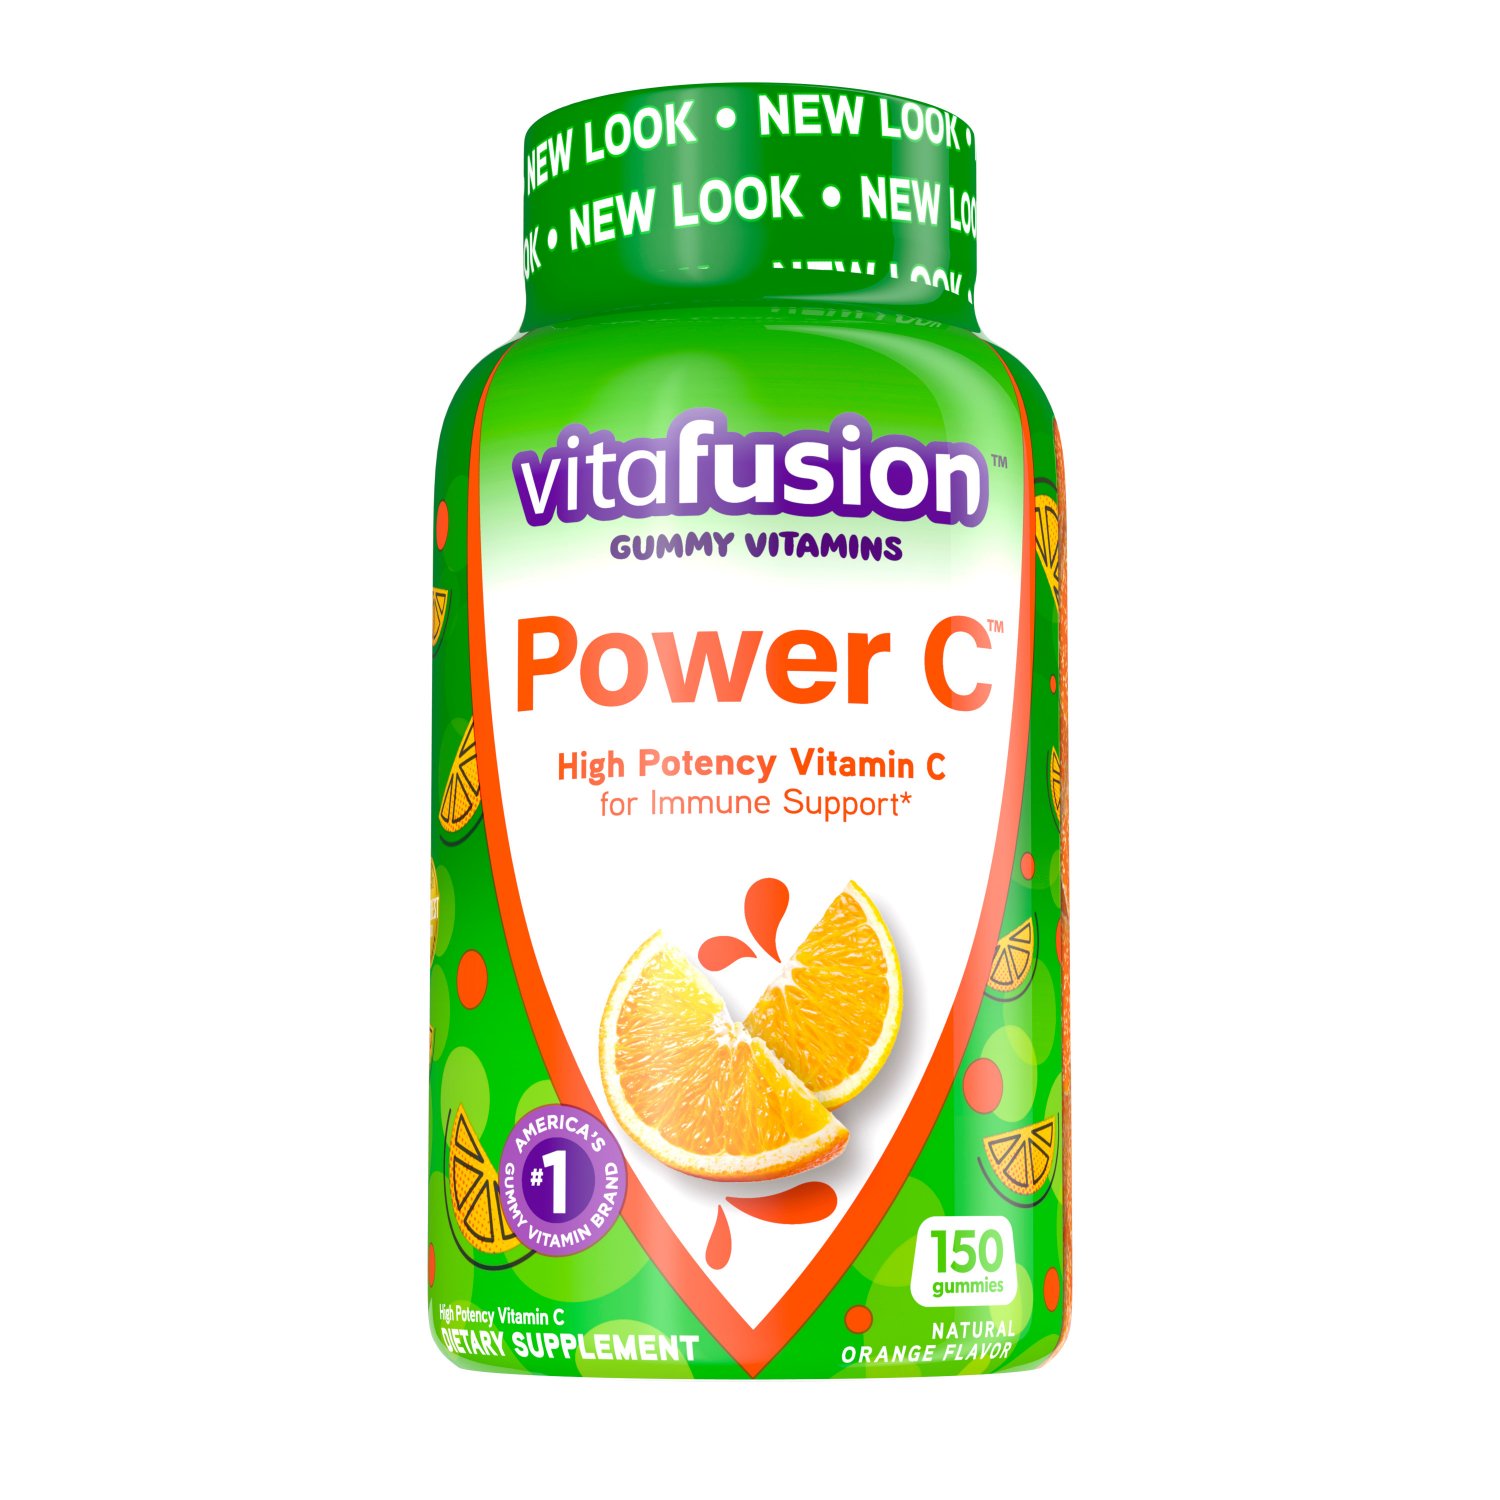 Vitafusion Power C Gummy Vitamins, 150 Count